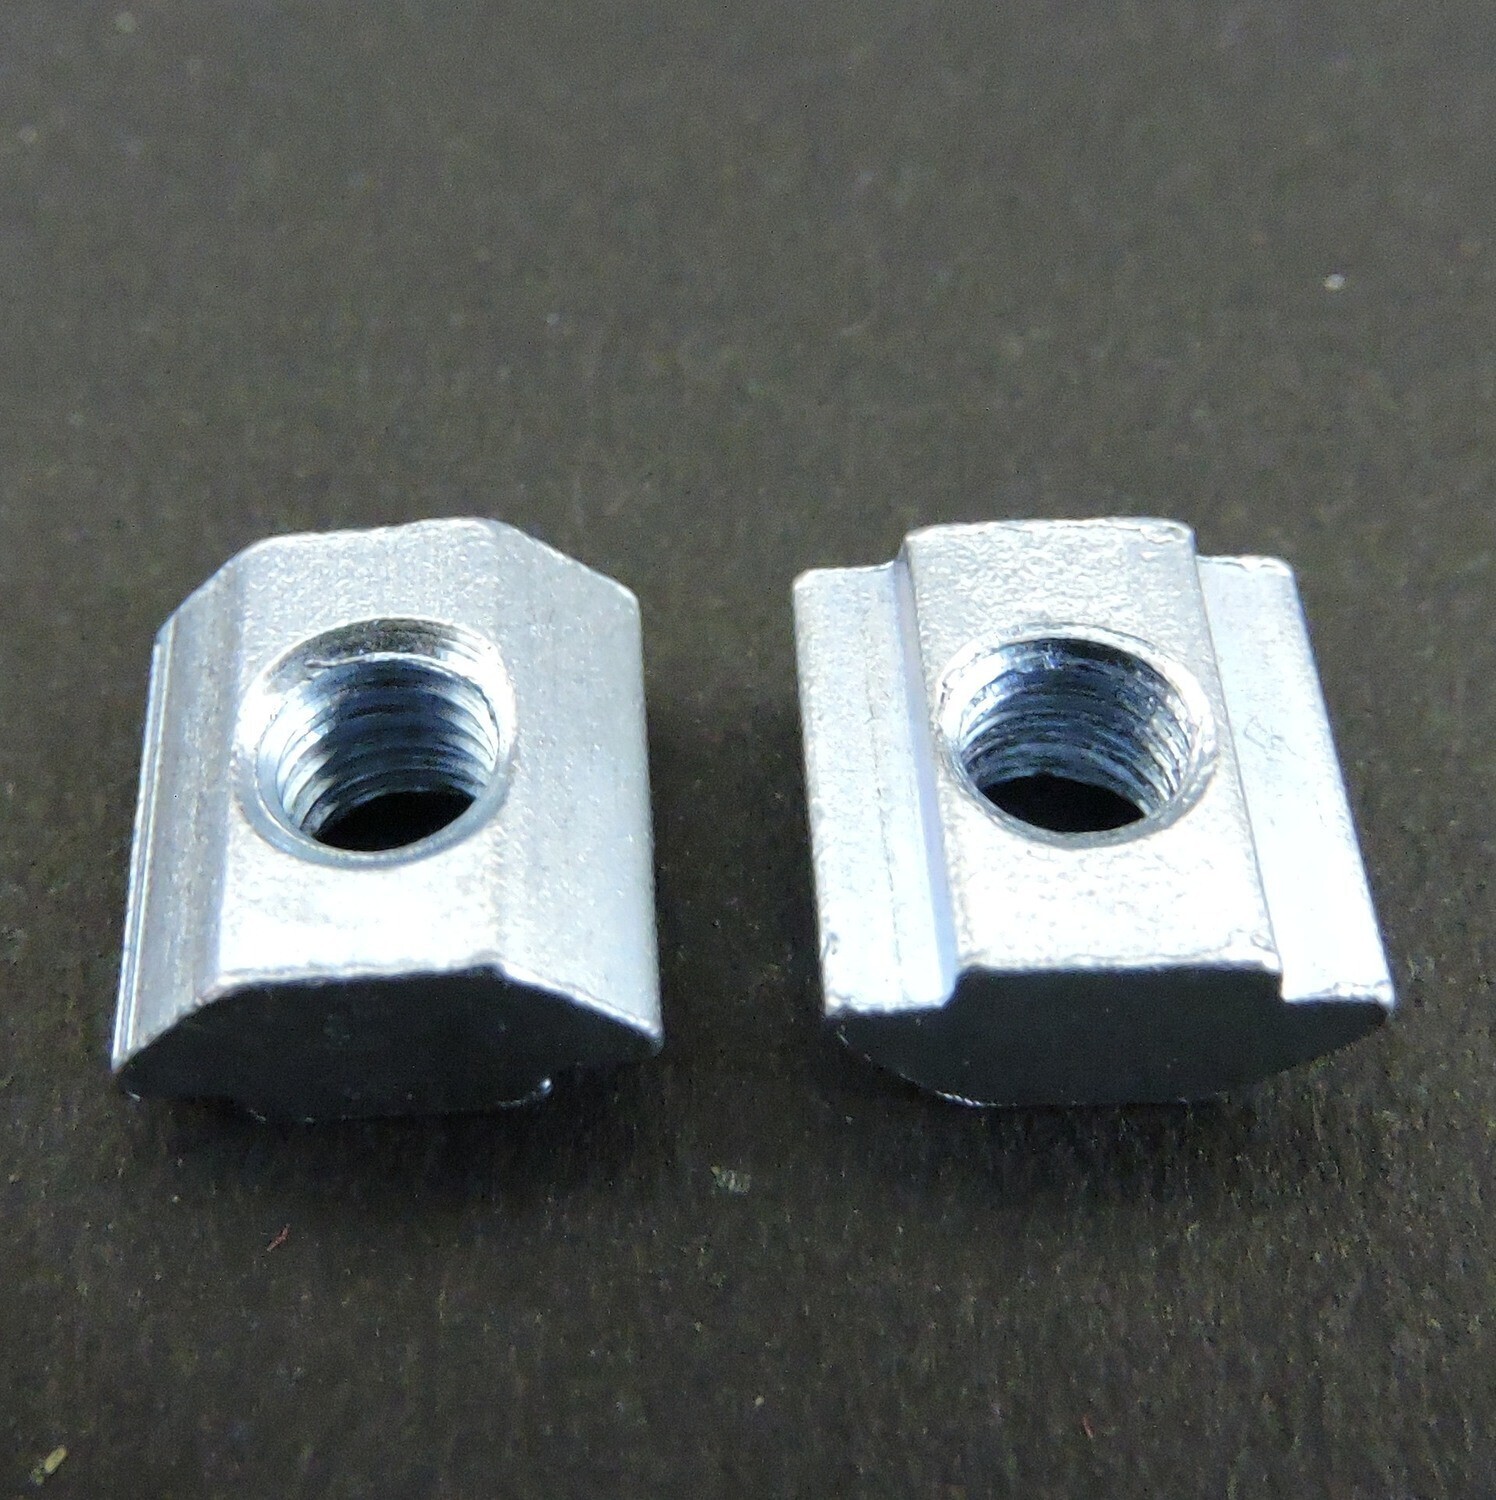 Pre Insertion T Nut for 45 Series Aluminium Extrusions